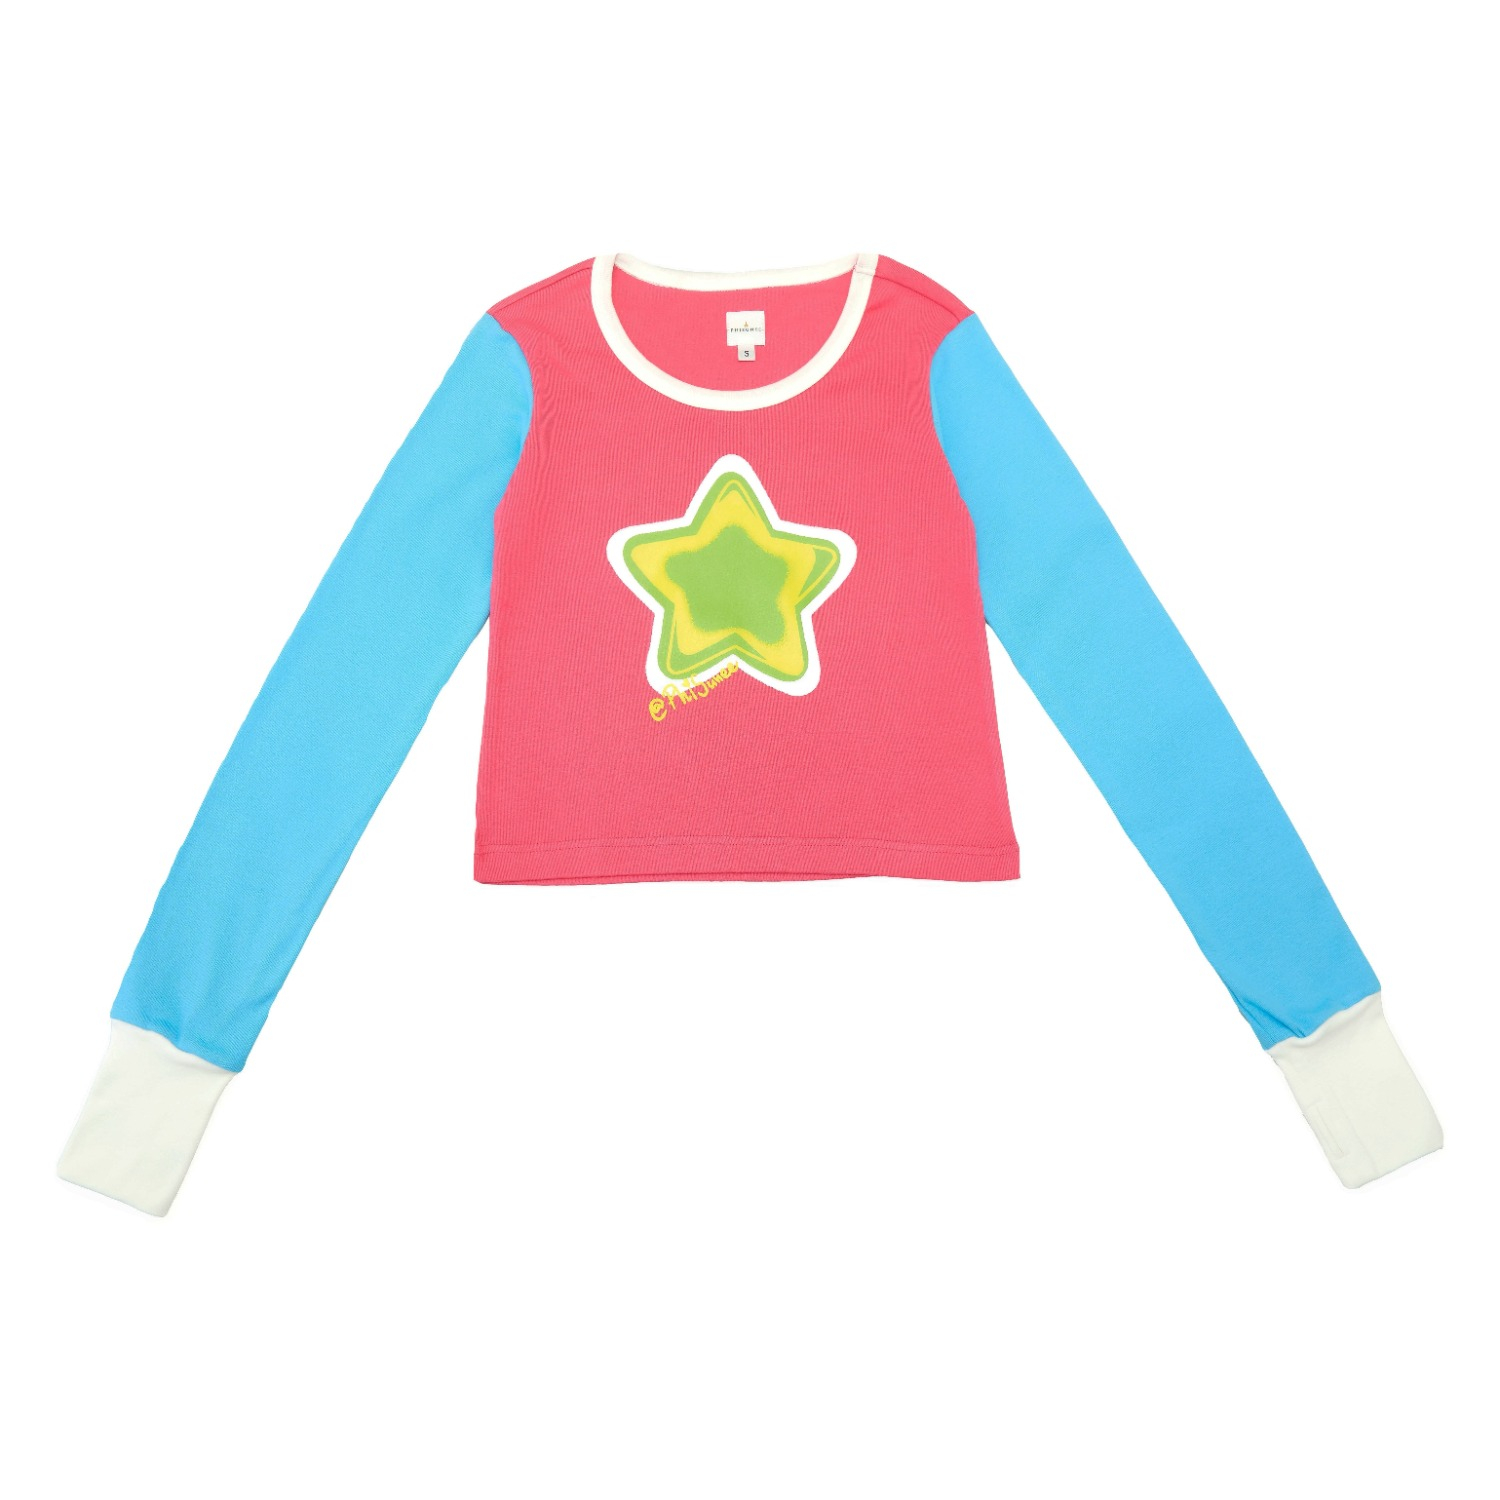 Star long sleeved shirt - Pink Lemon